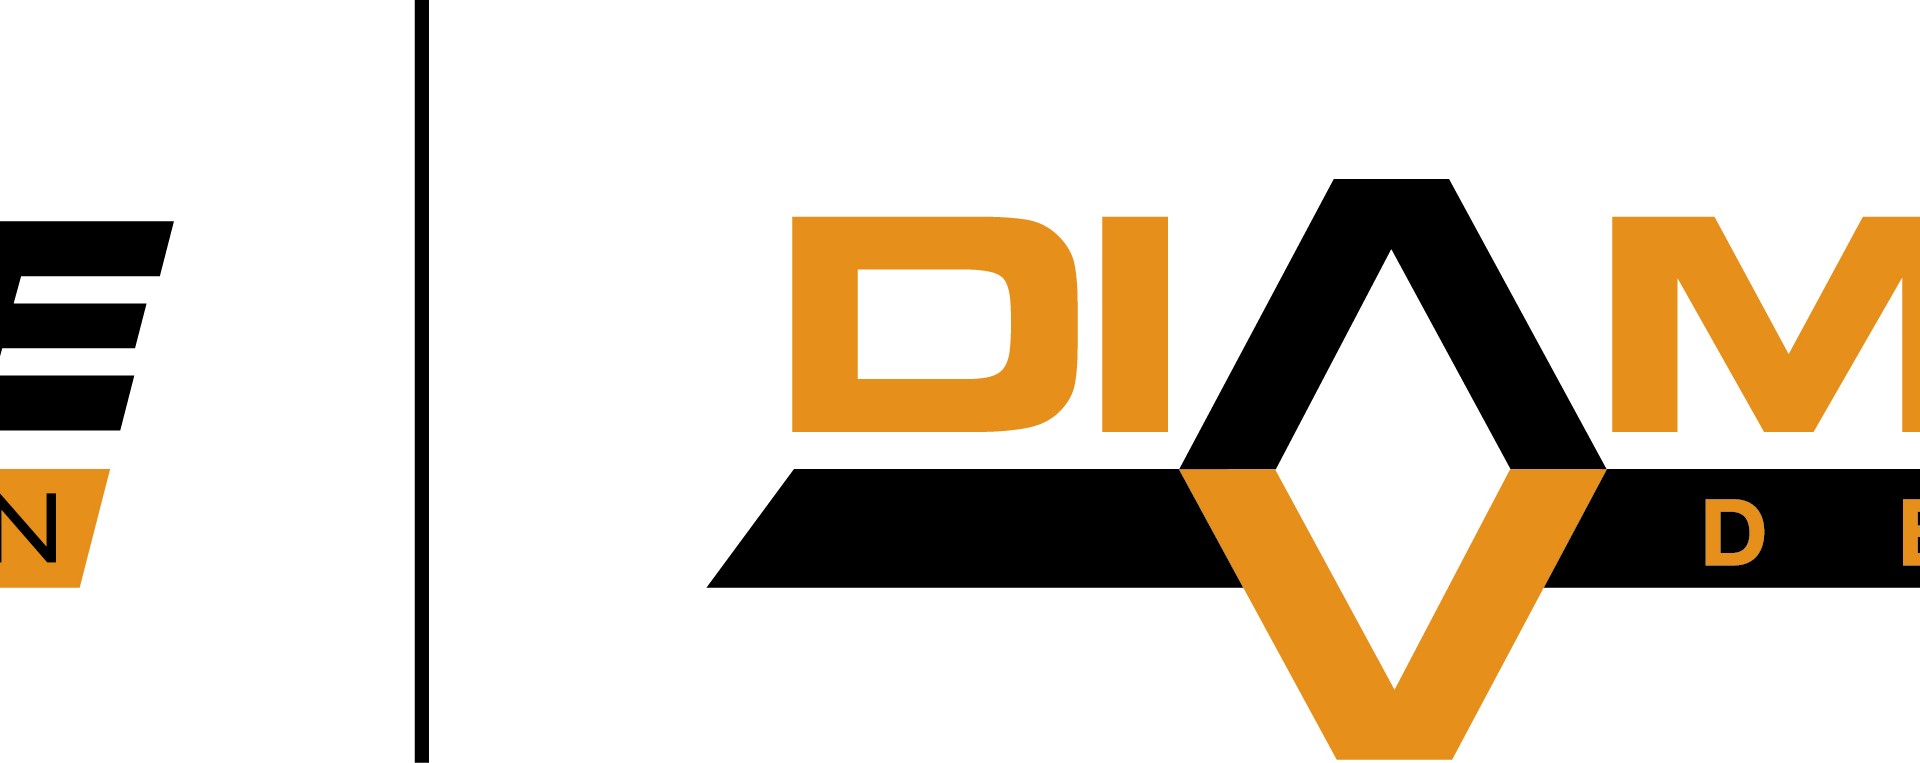 Diamond Dealer Logo